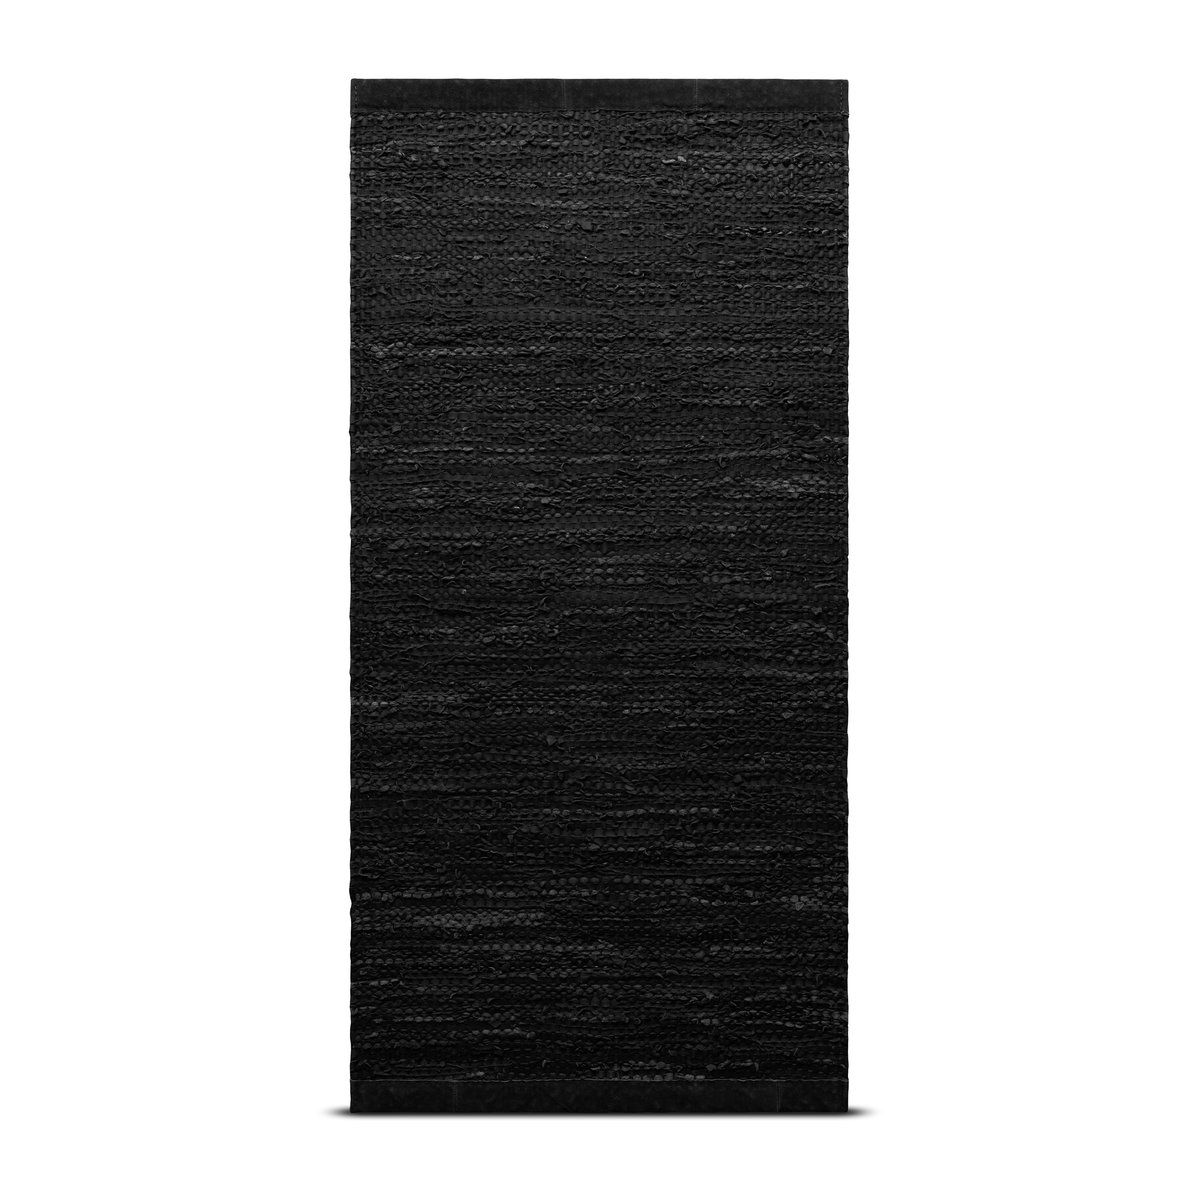 Rug Solid Leather vloerkleed 140 x 200 cm. black (zwart)